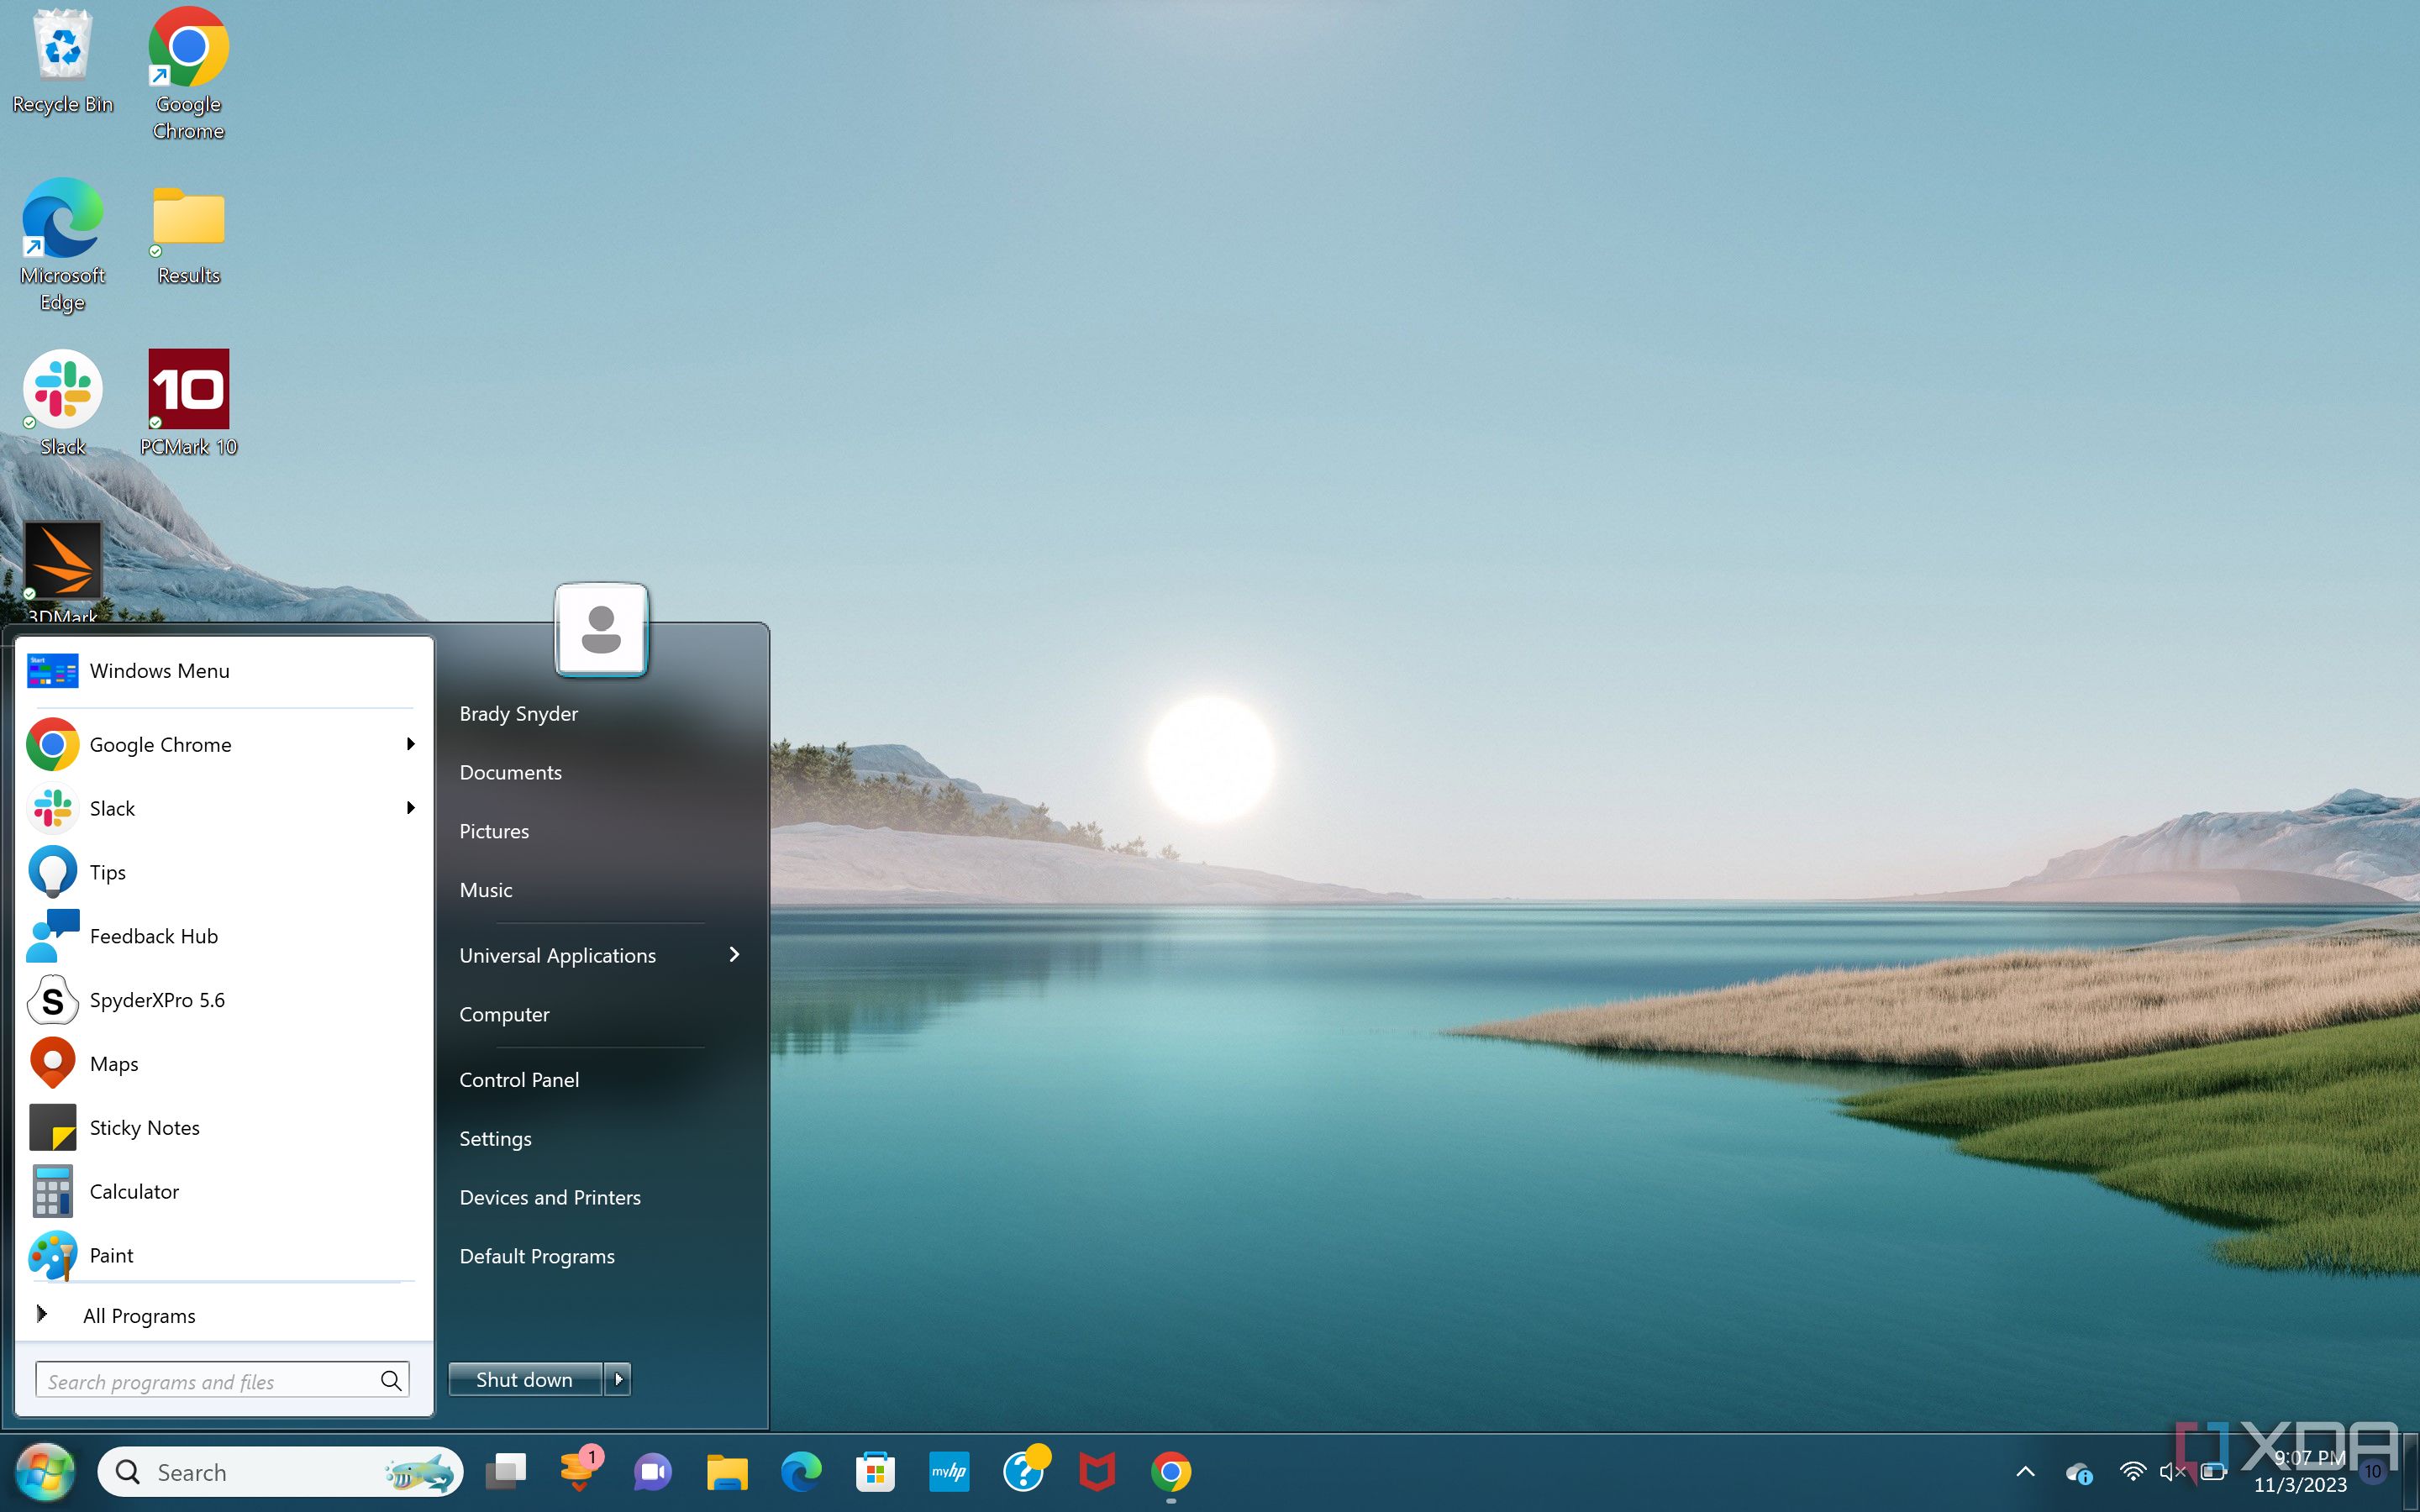 The Windows 7 appearance on a Windows 11 PC.